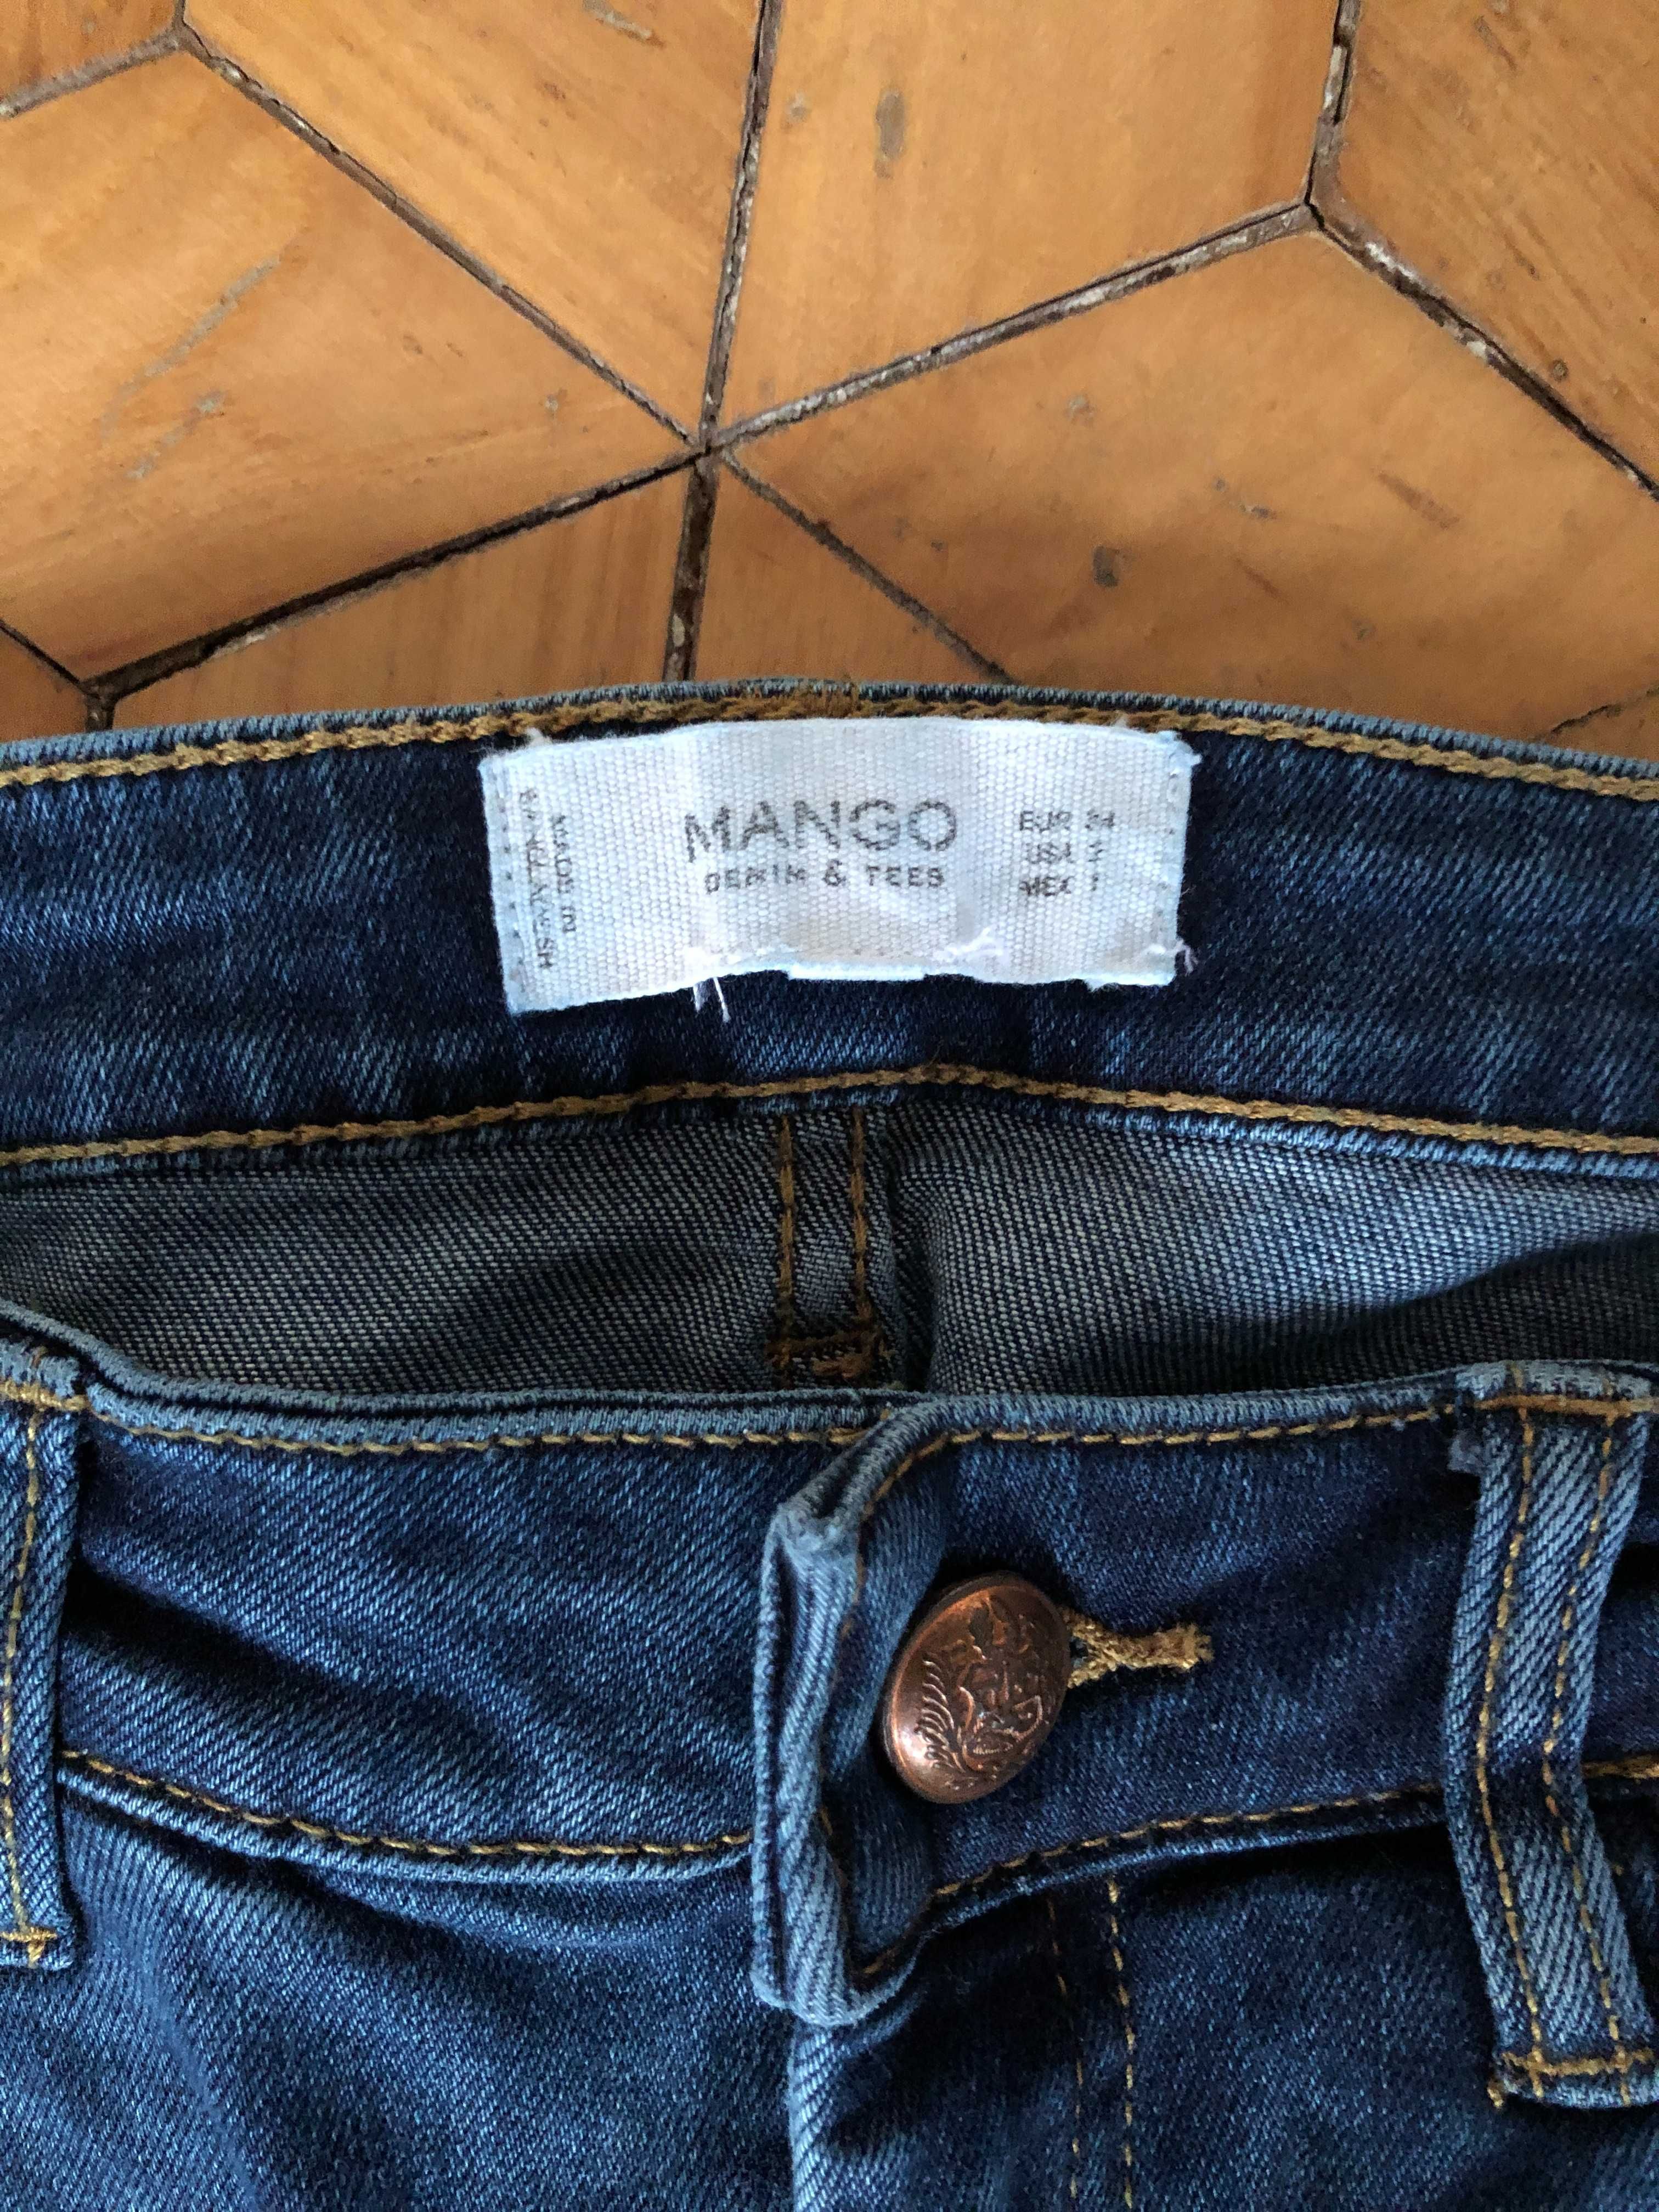 Spodnie jeansy Mango 34 denim & tees skinny